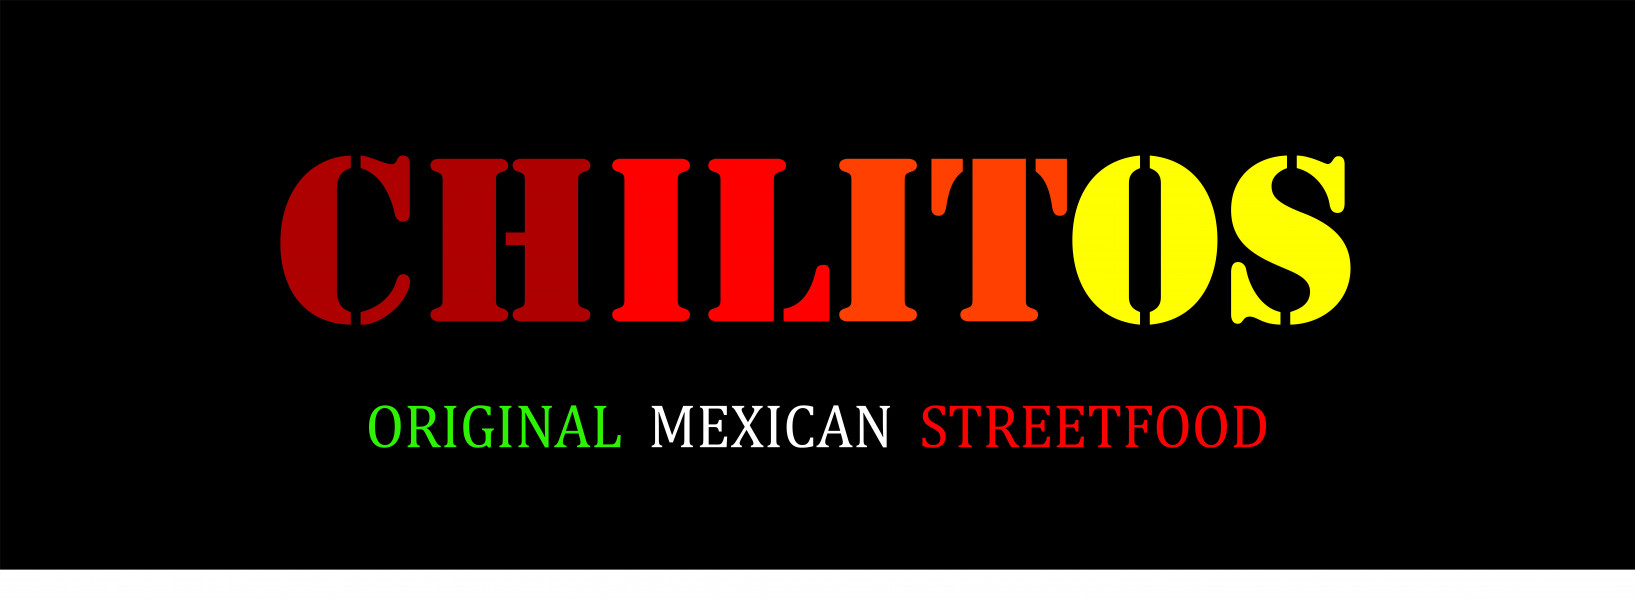 Chilitos - Original Mexican Streetfood